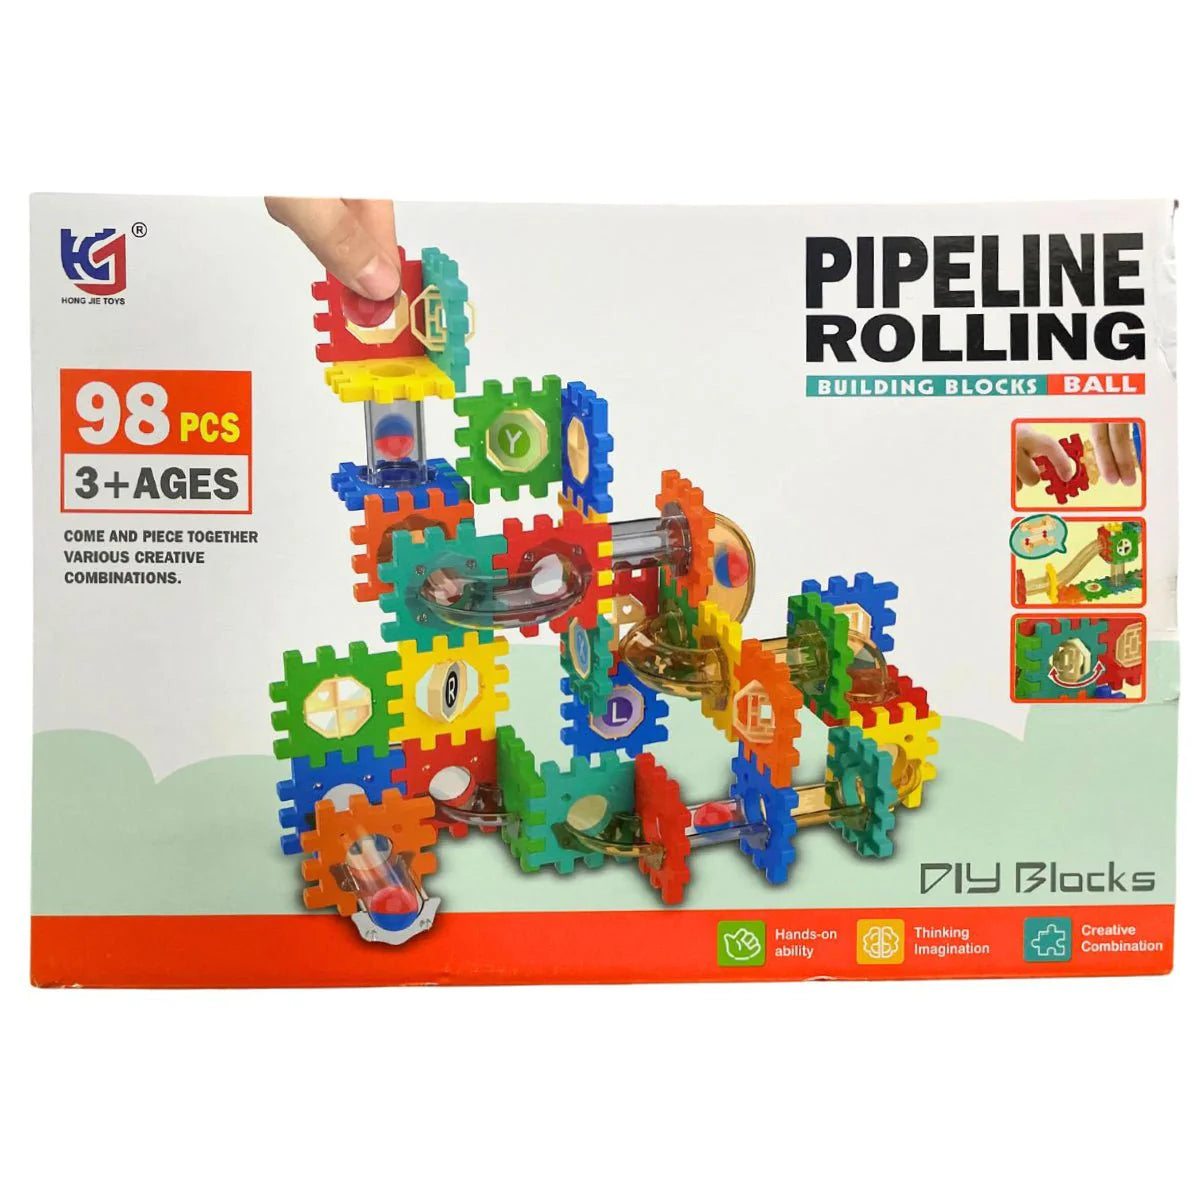 Pipeline Rolling Building Blocks & Ball 98 Pcs E039